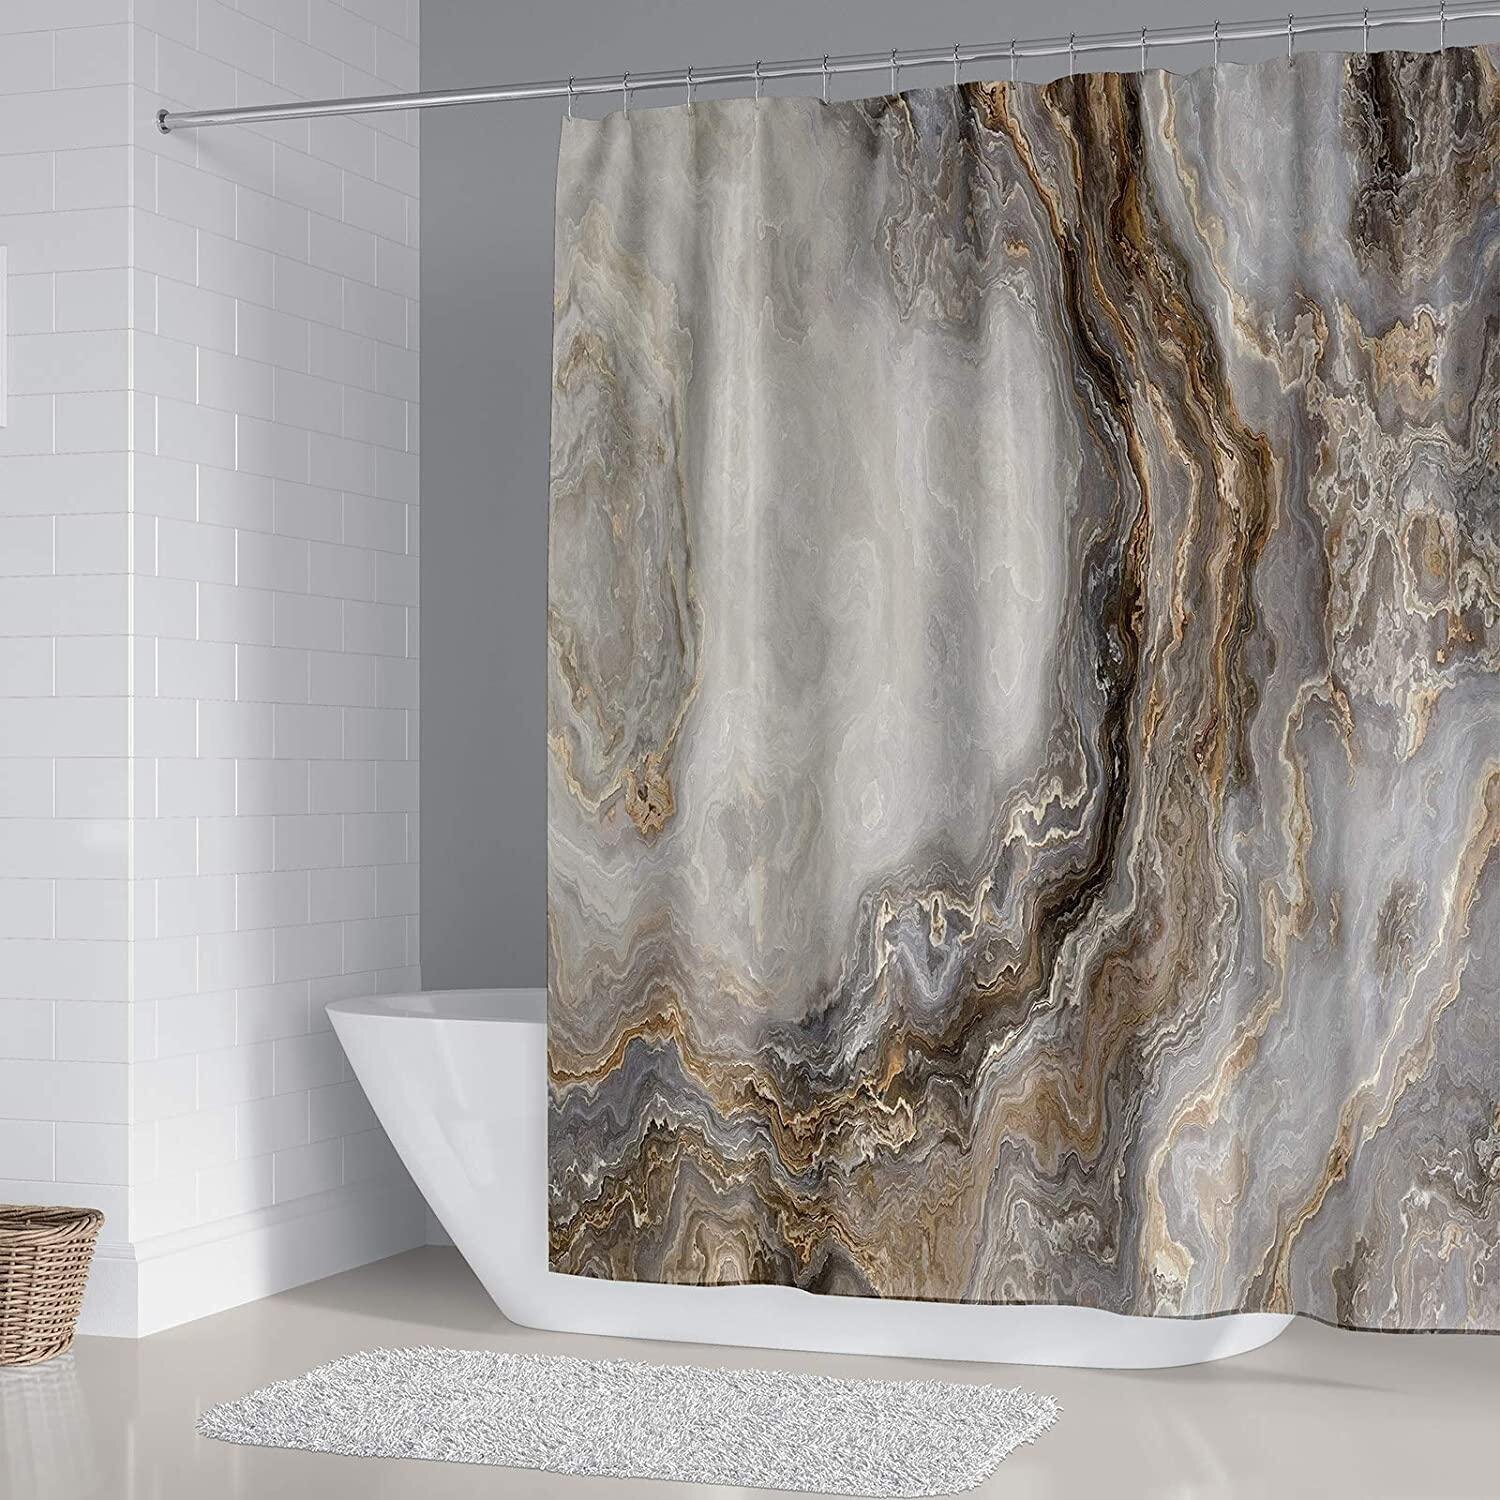 Luxury bathroom curtains in a marble design